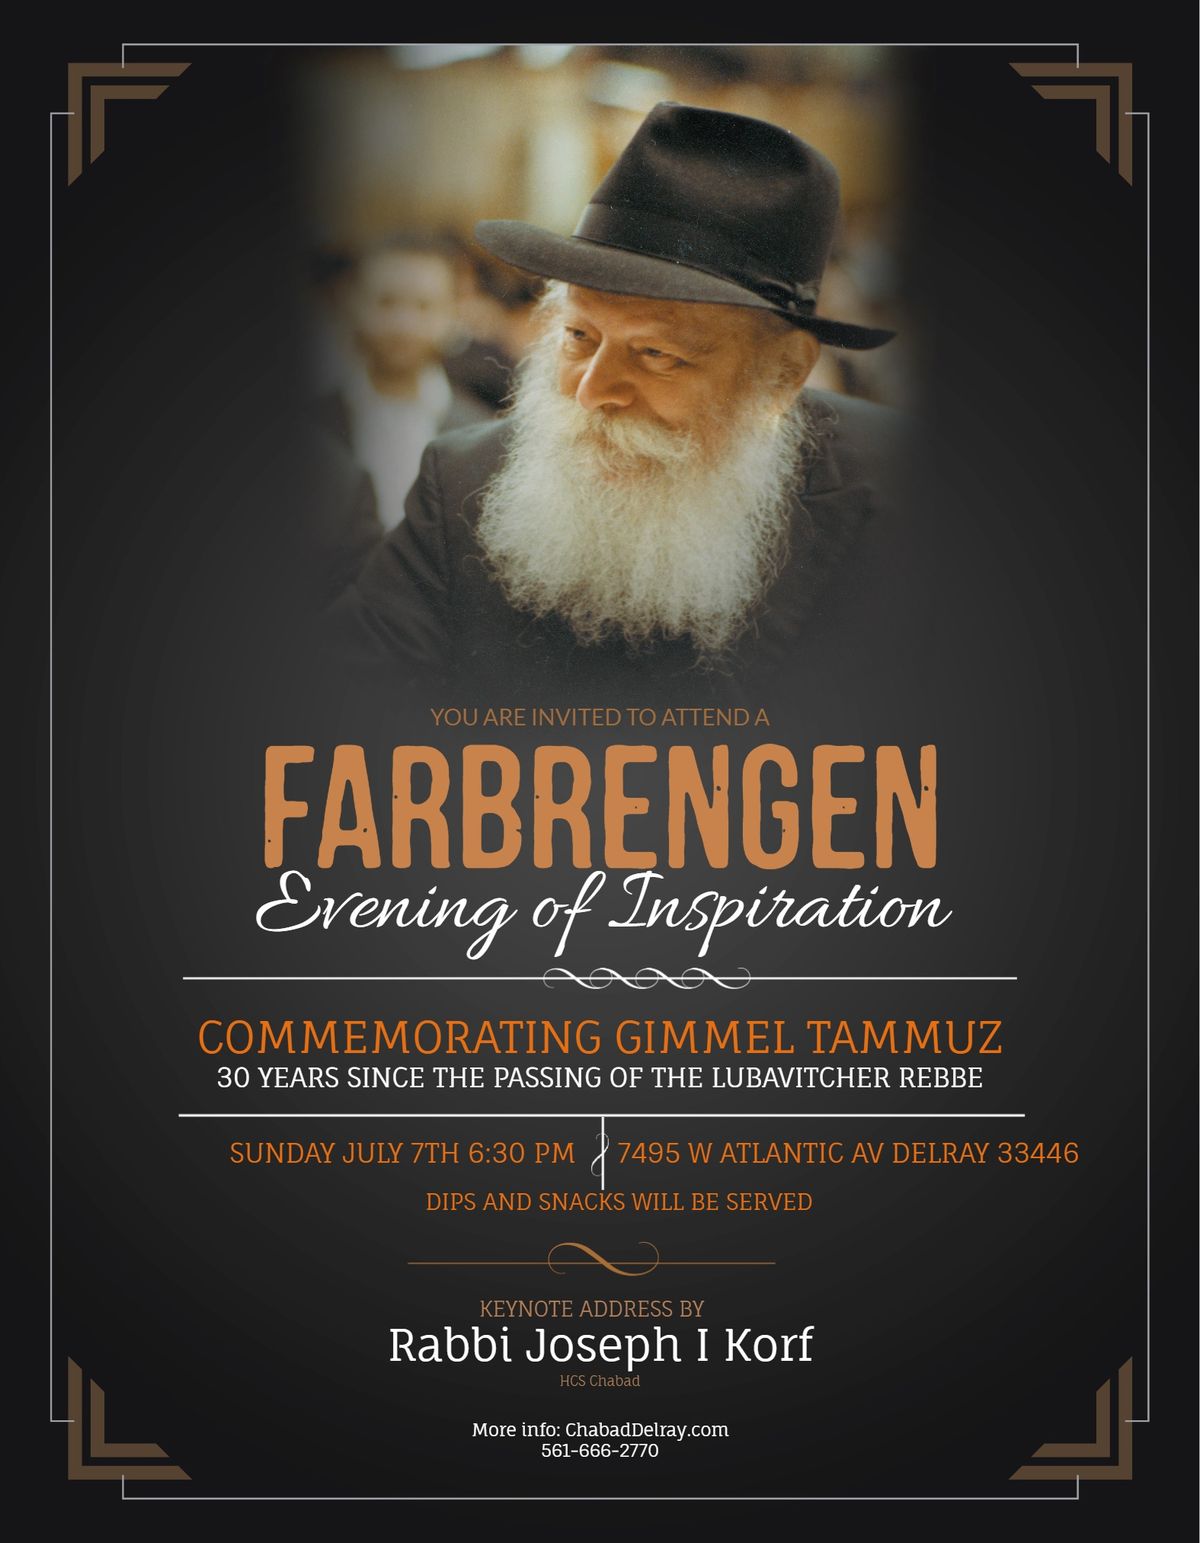 Farbrengen Gimmel Tammuz with Guest Speaker Rabbi Joseph I Korf